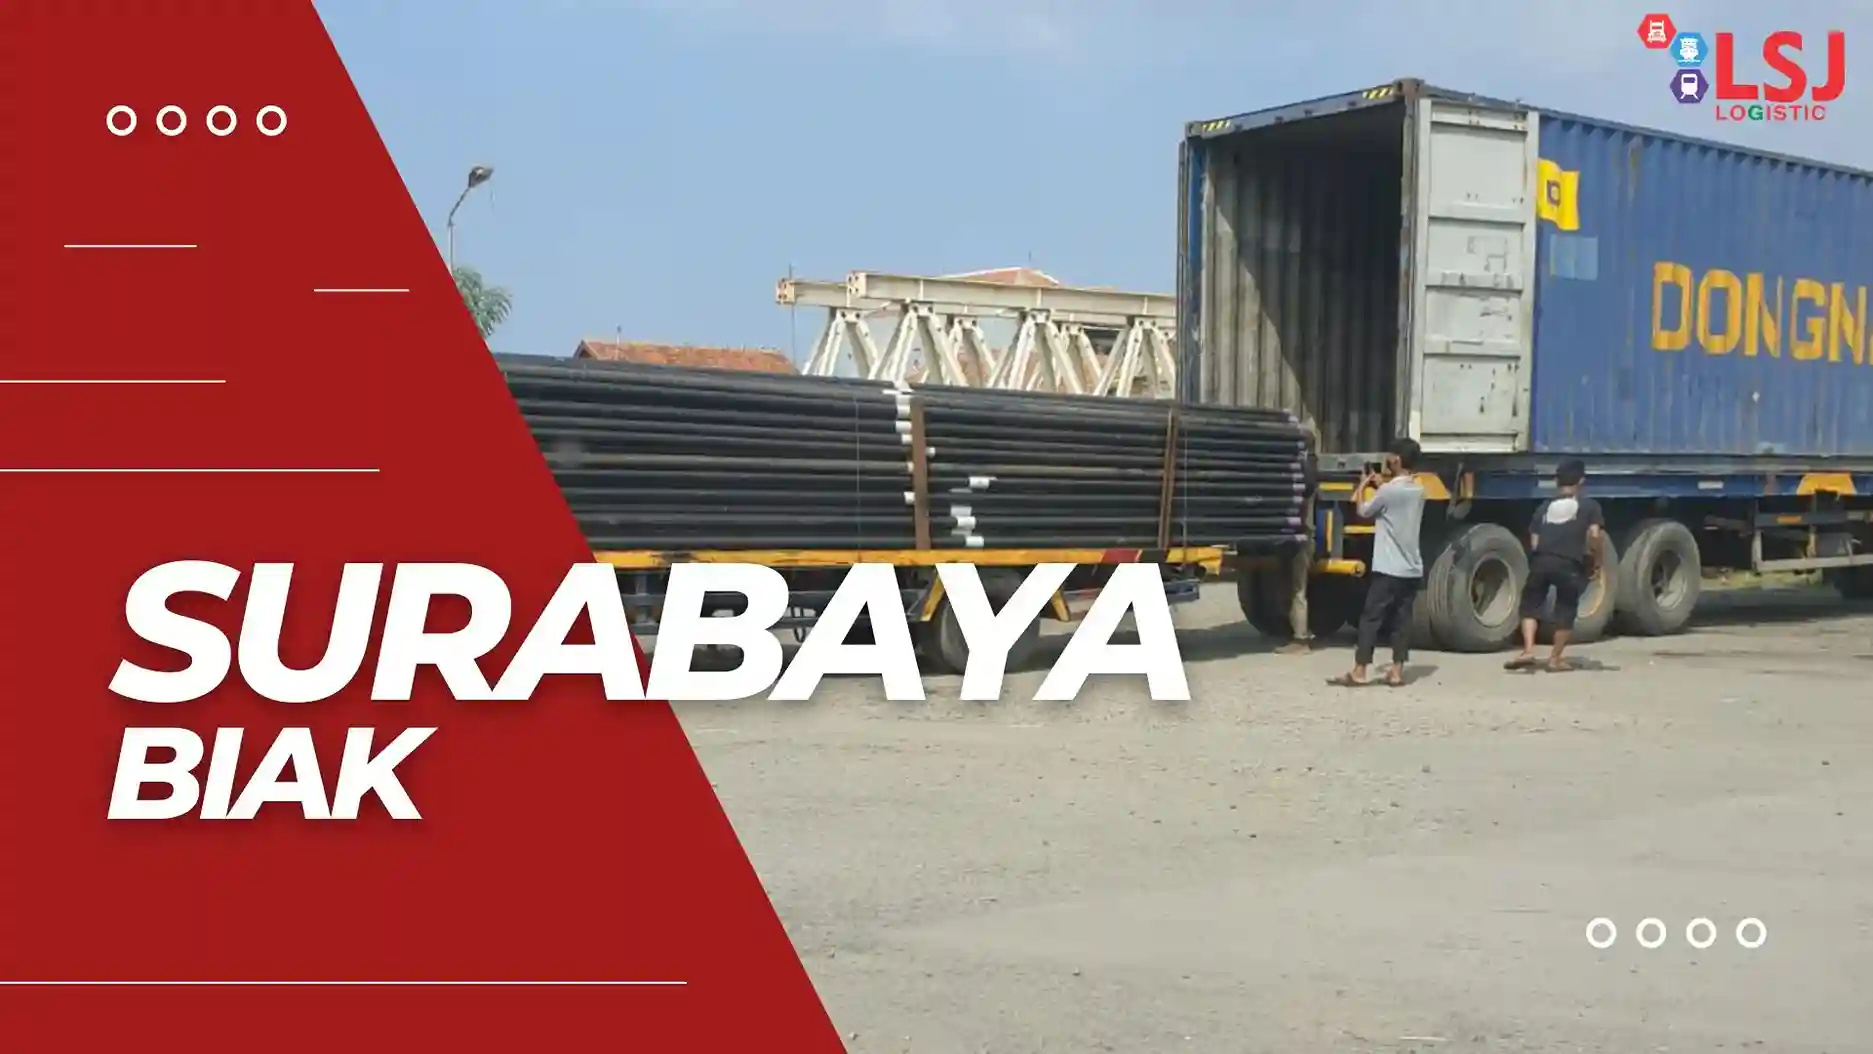 Ekspedisi Container Surabaya Biak